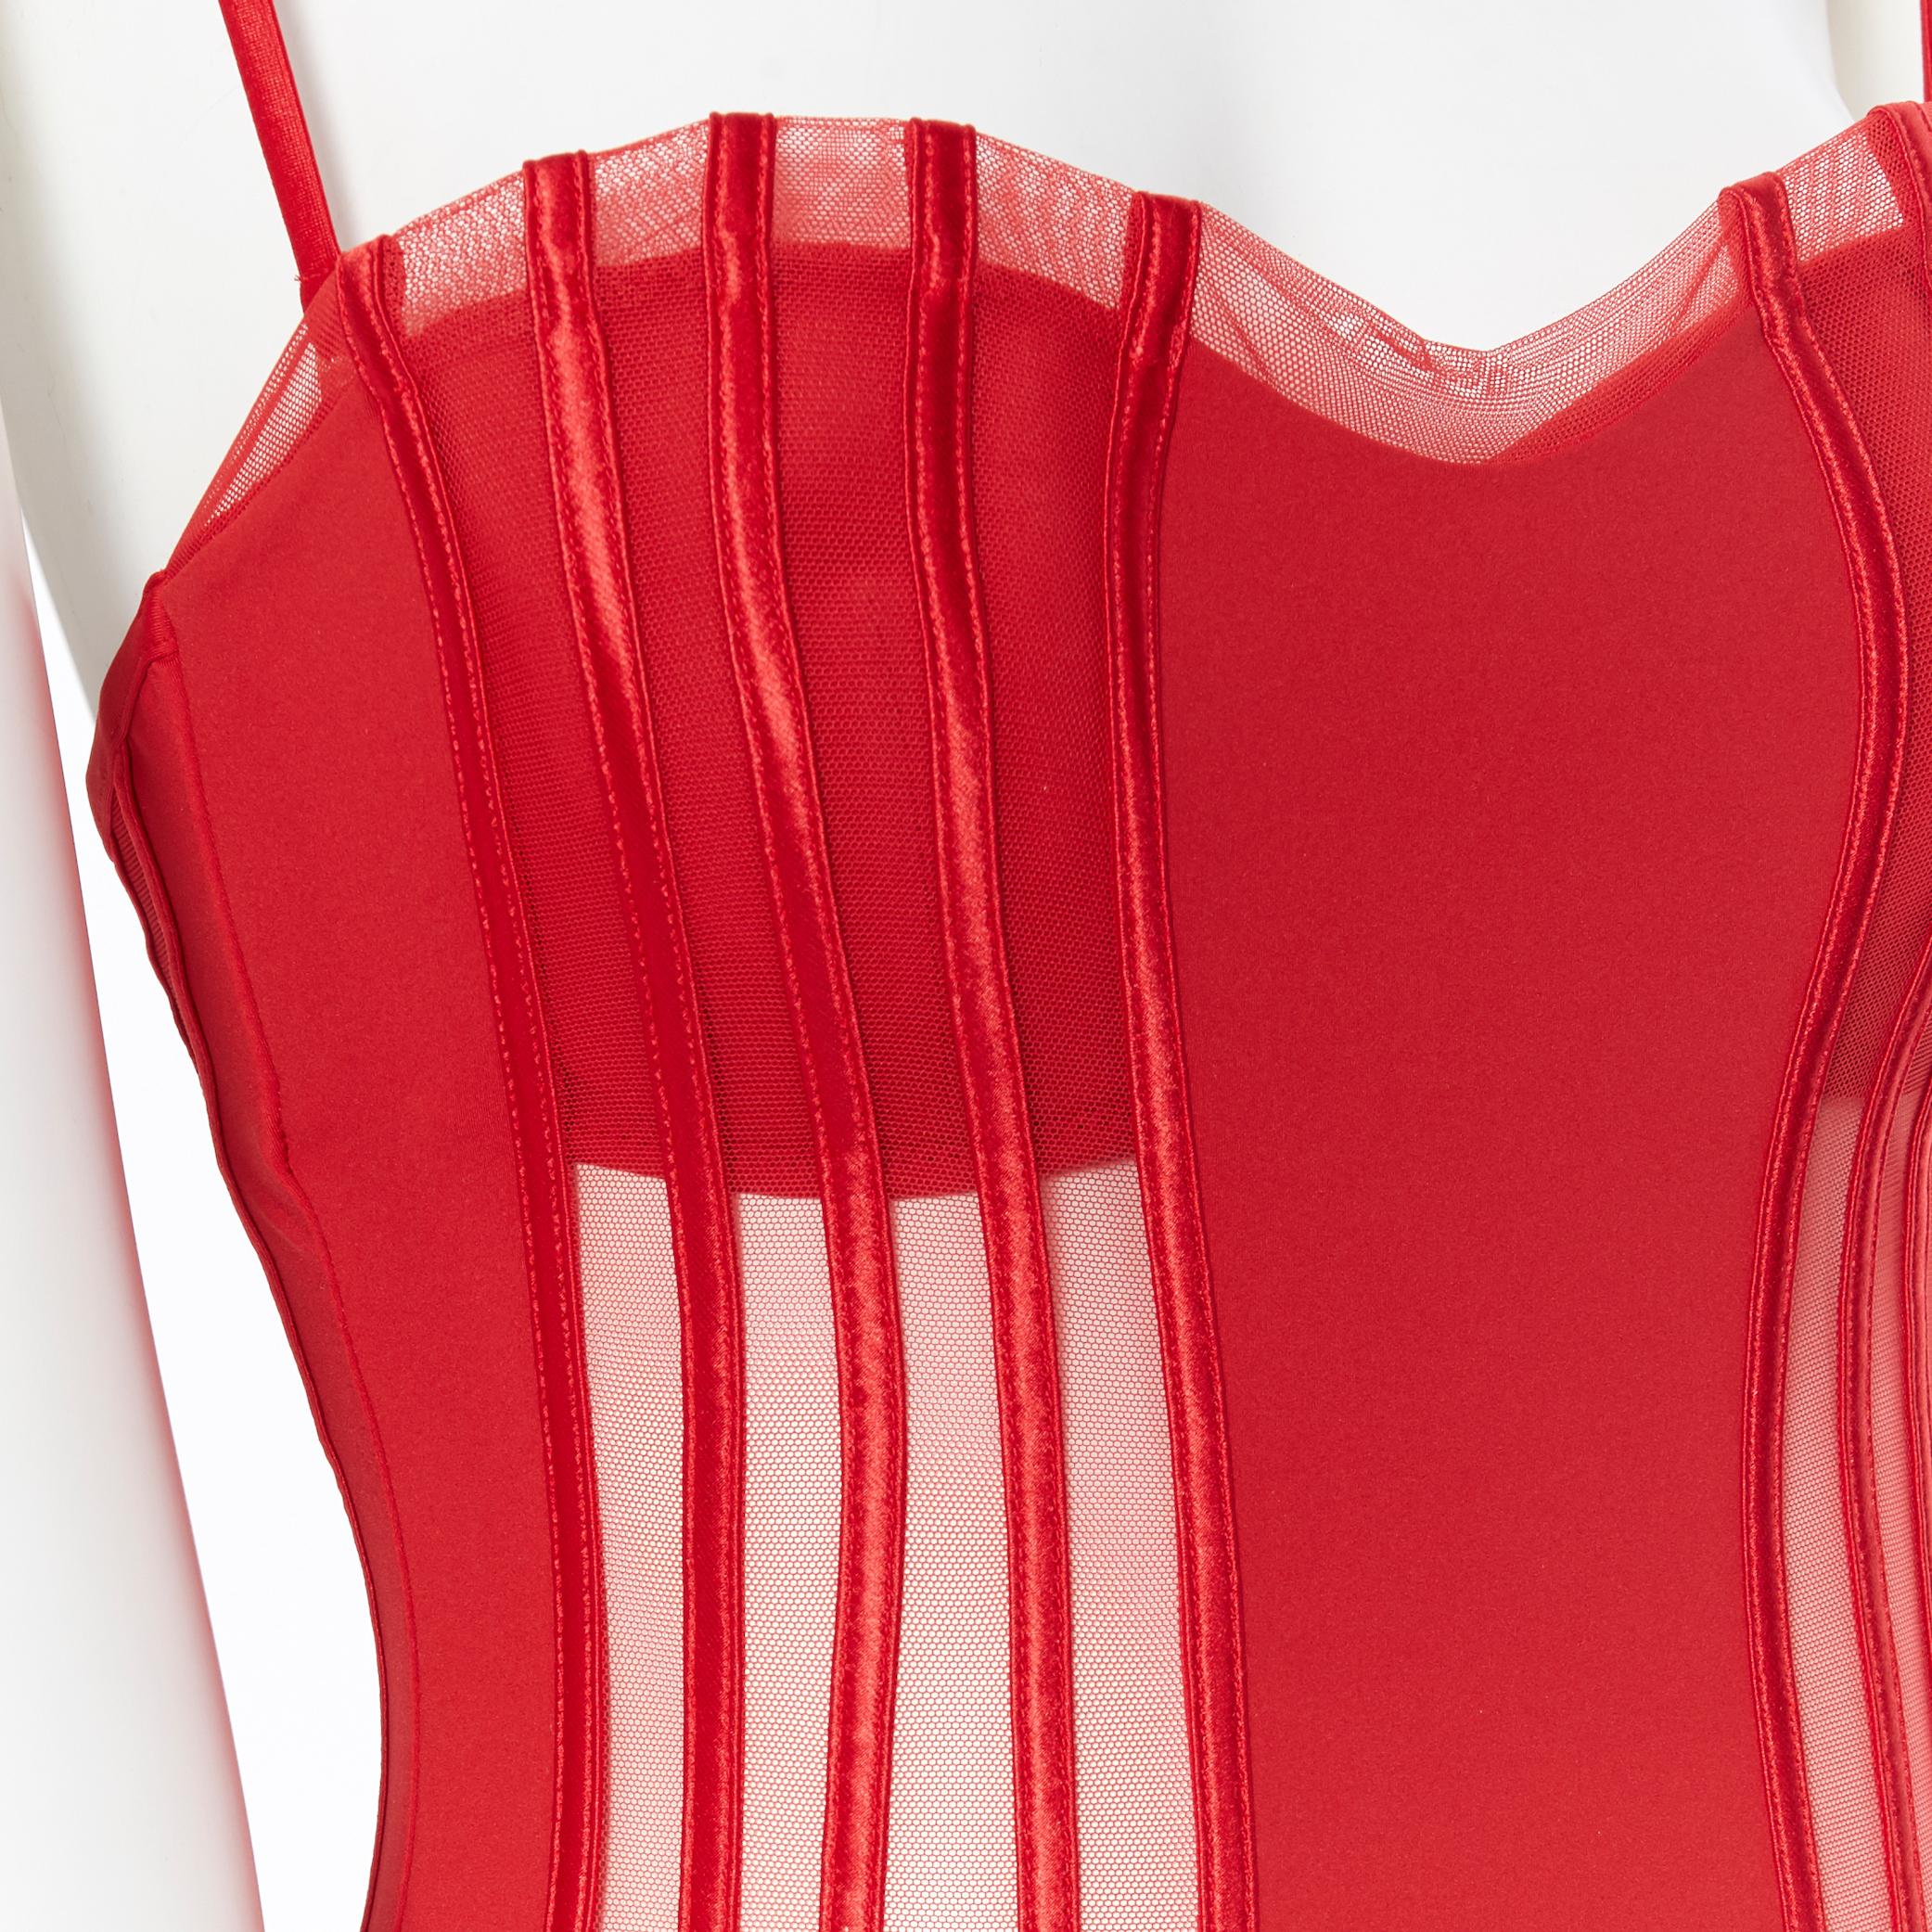 new LA PERLA Graphique Couture red boned sheer body monokini swimsuit IT44B M 3